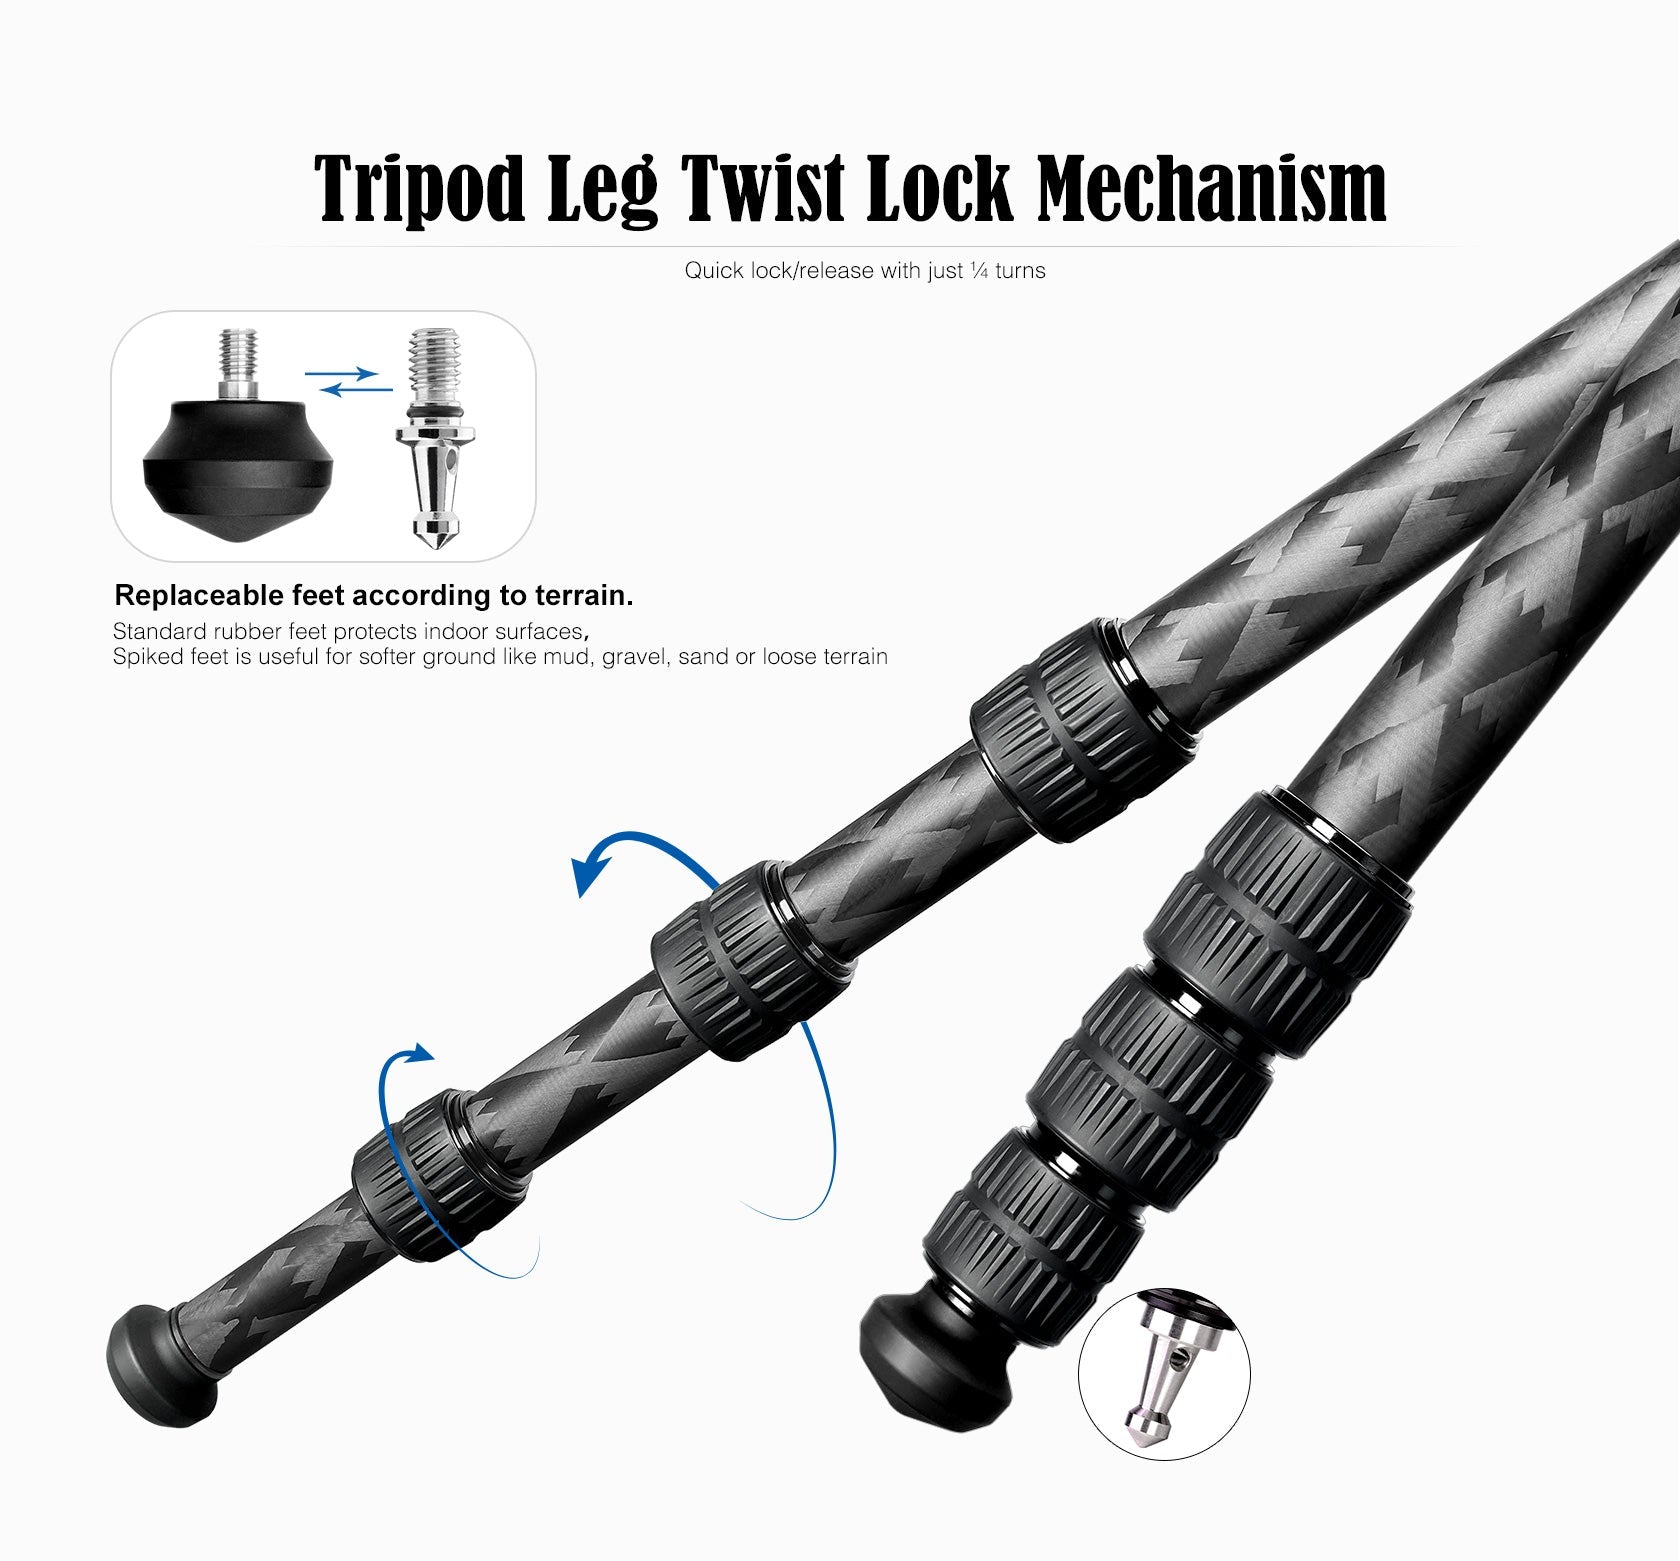 Leofoto LQ-324C Premium Carbon Fiber Tripod with Quick Swap Center Column+Apex Platform and Tripod Bag